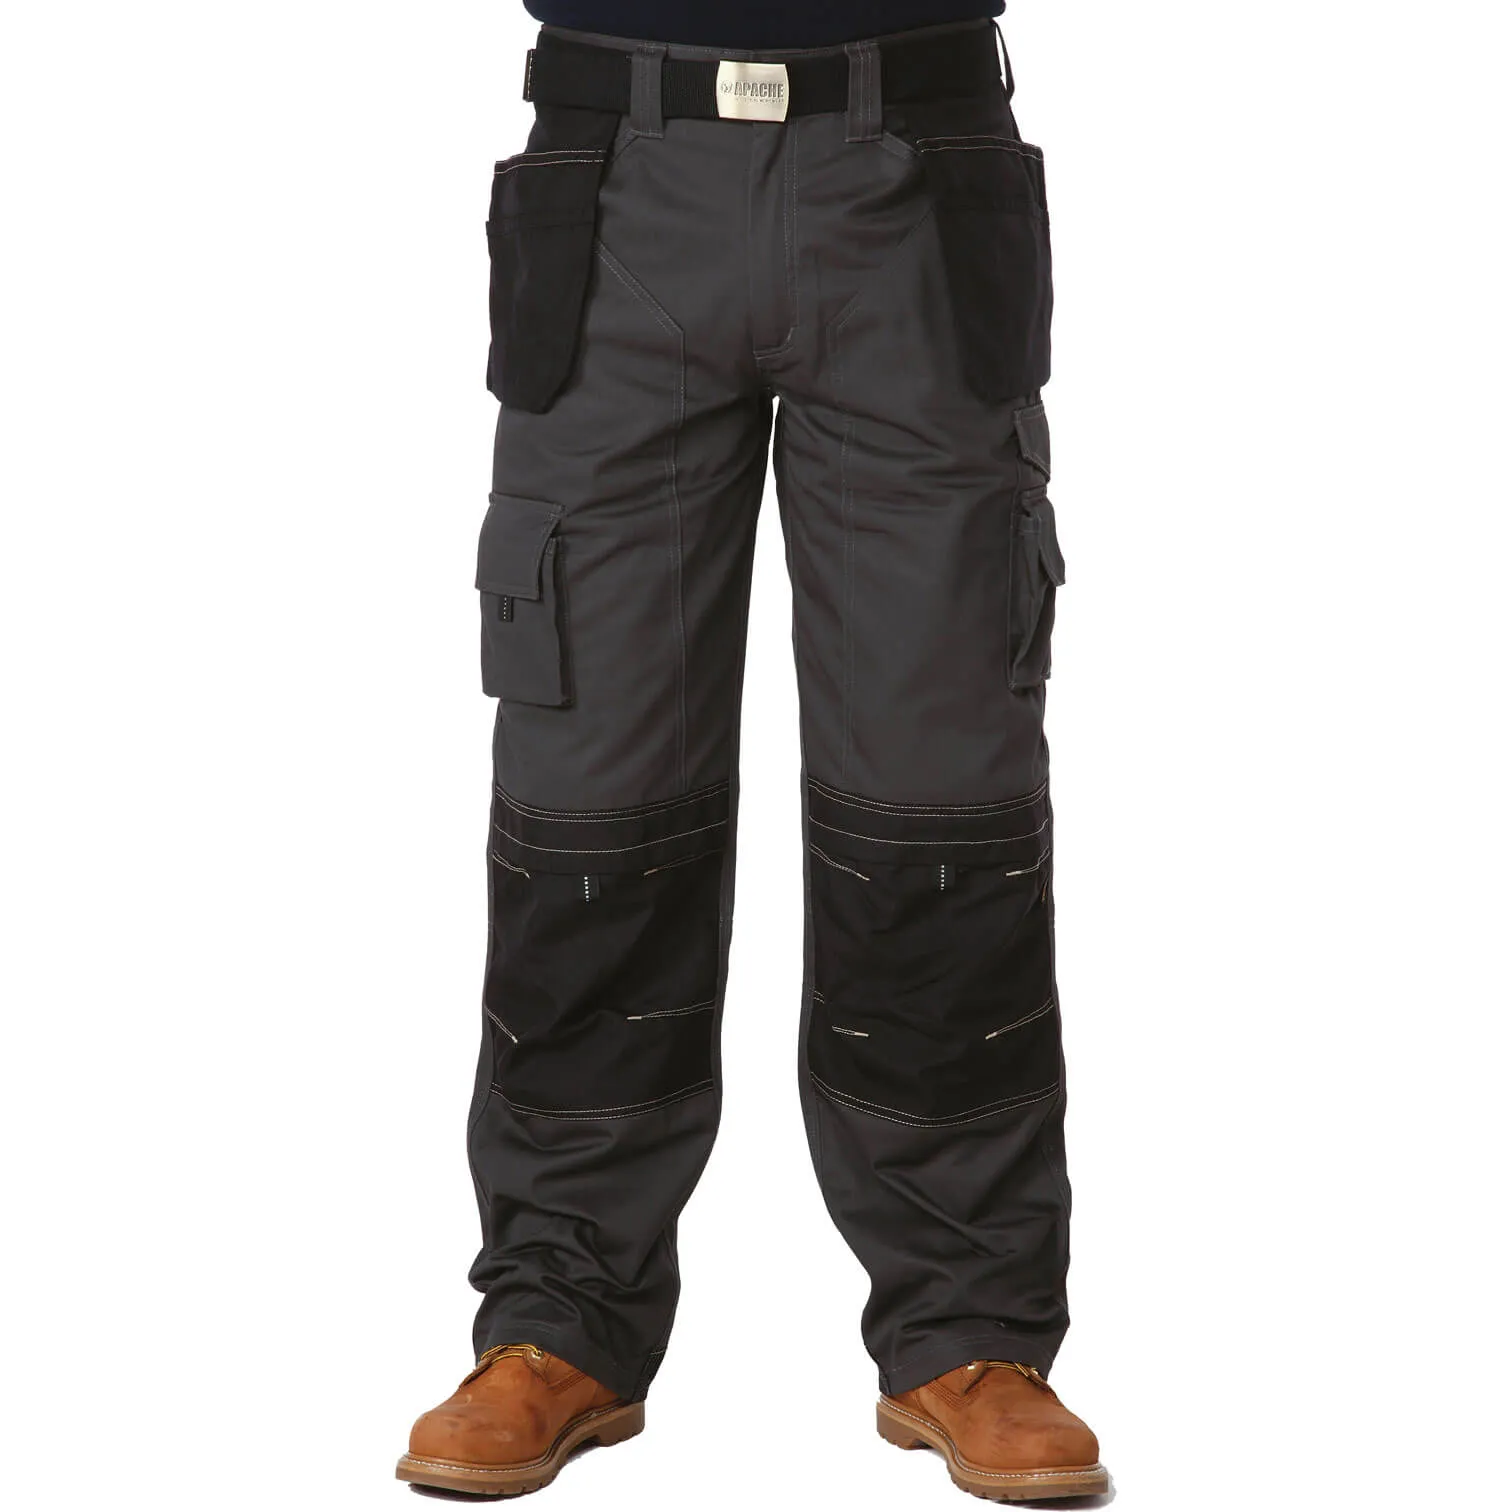 Apache Mens Holster Pocket Trousers - Black / Grey, 36", 31"